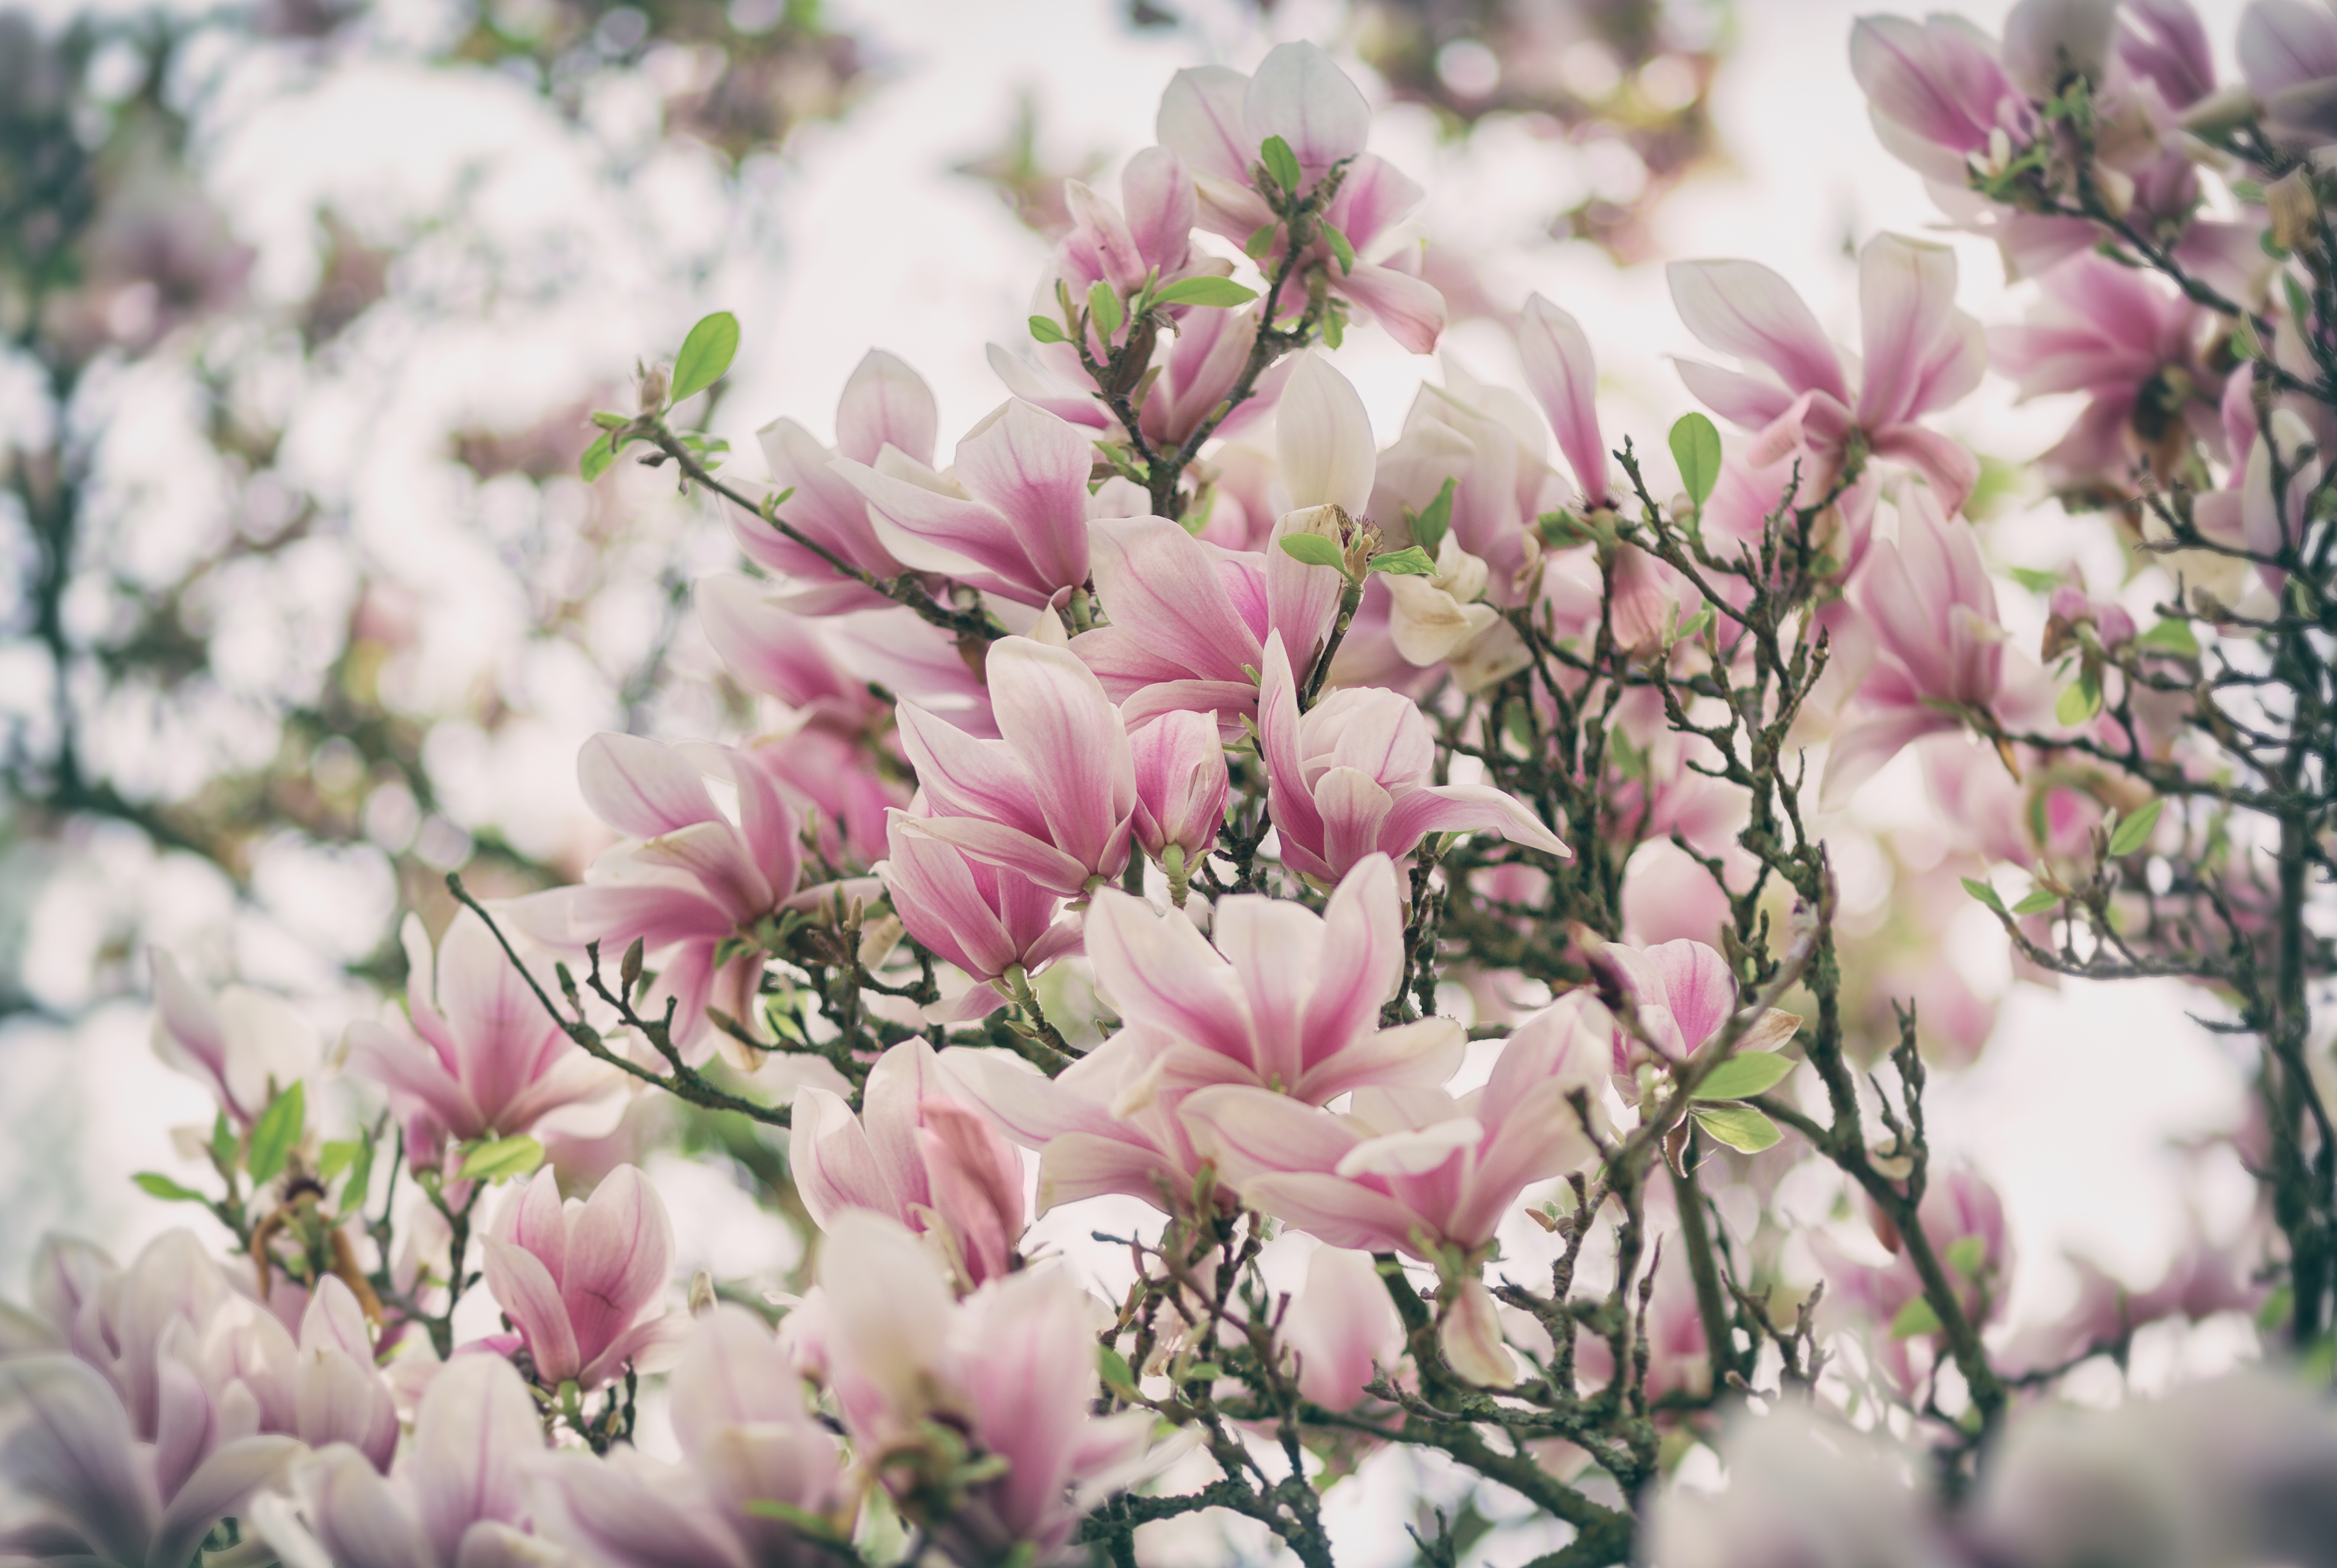 magnolia trees